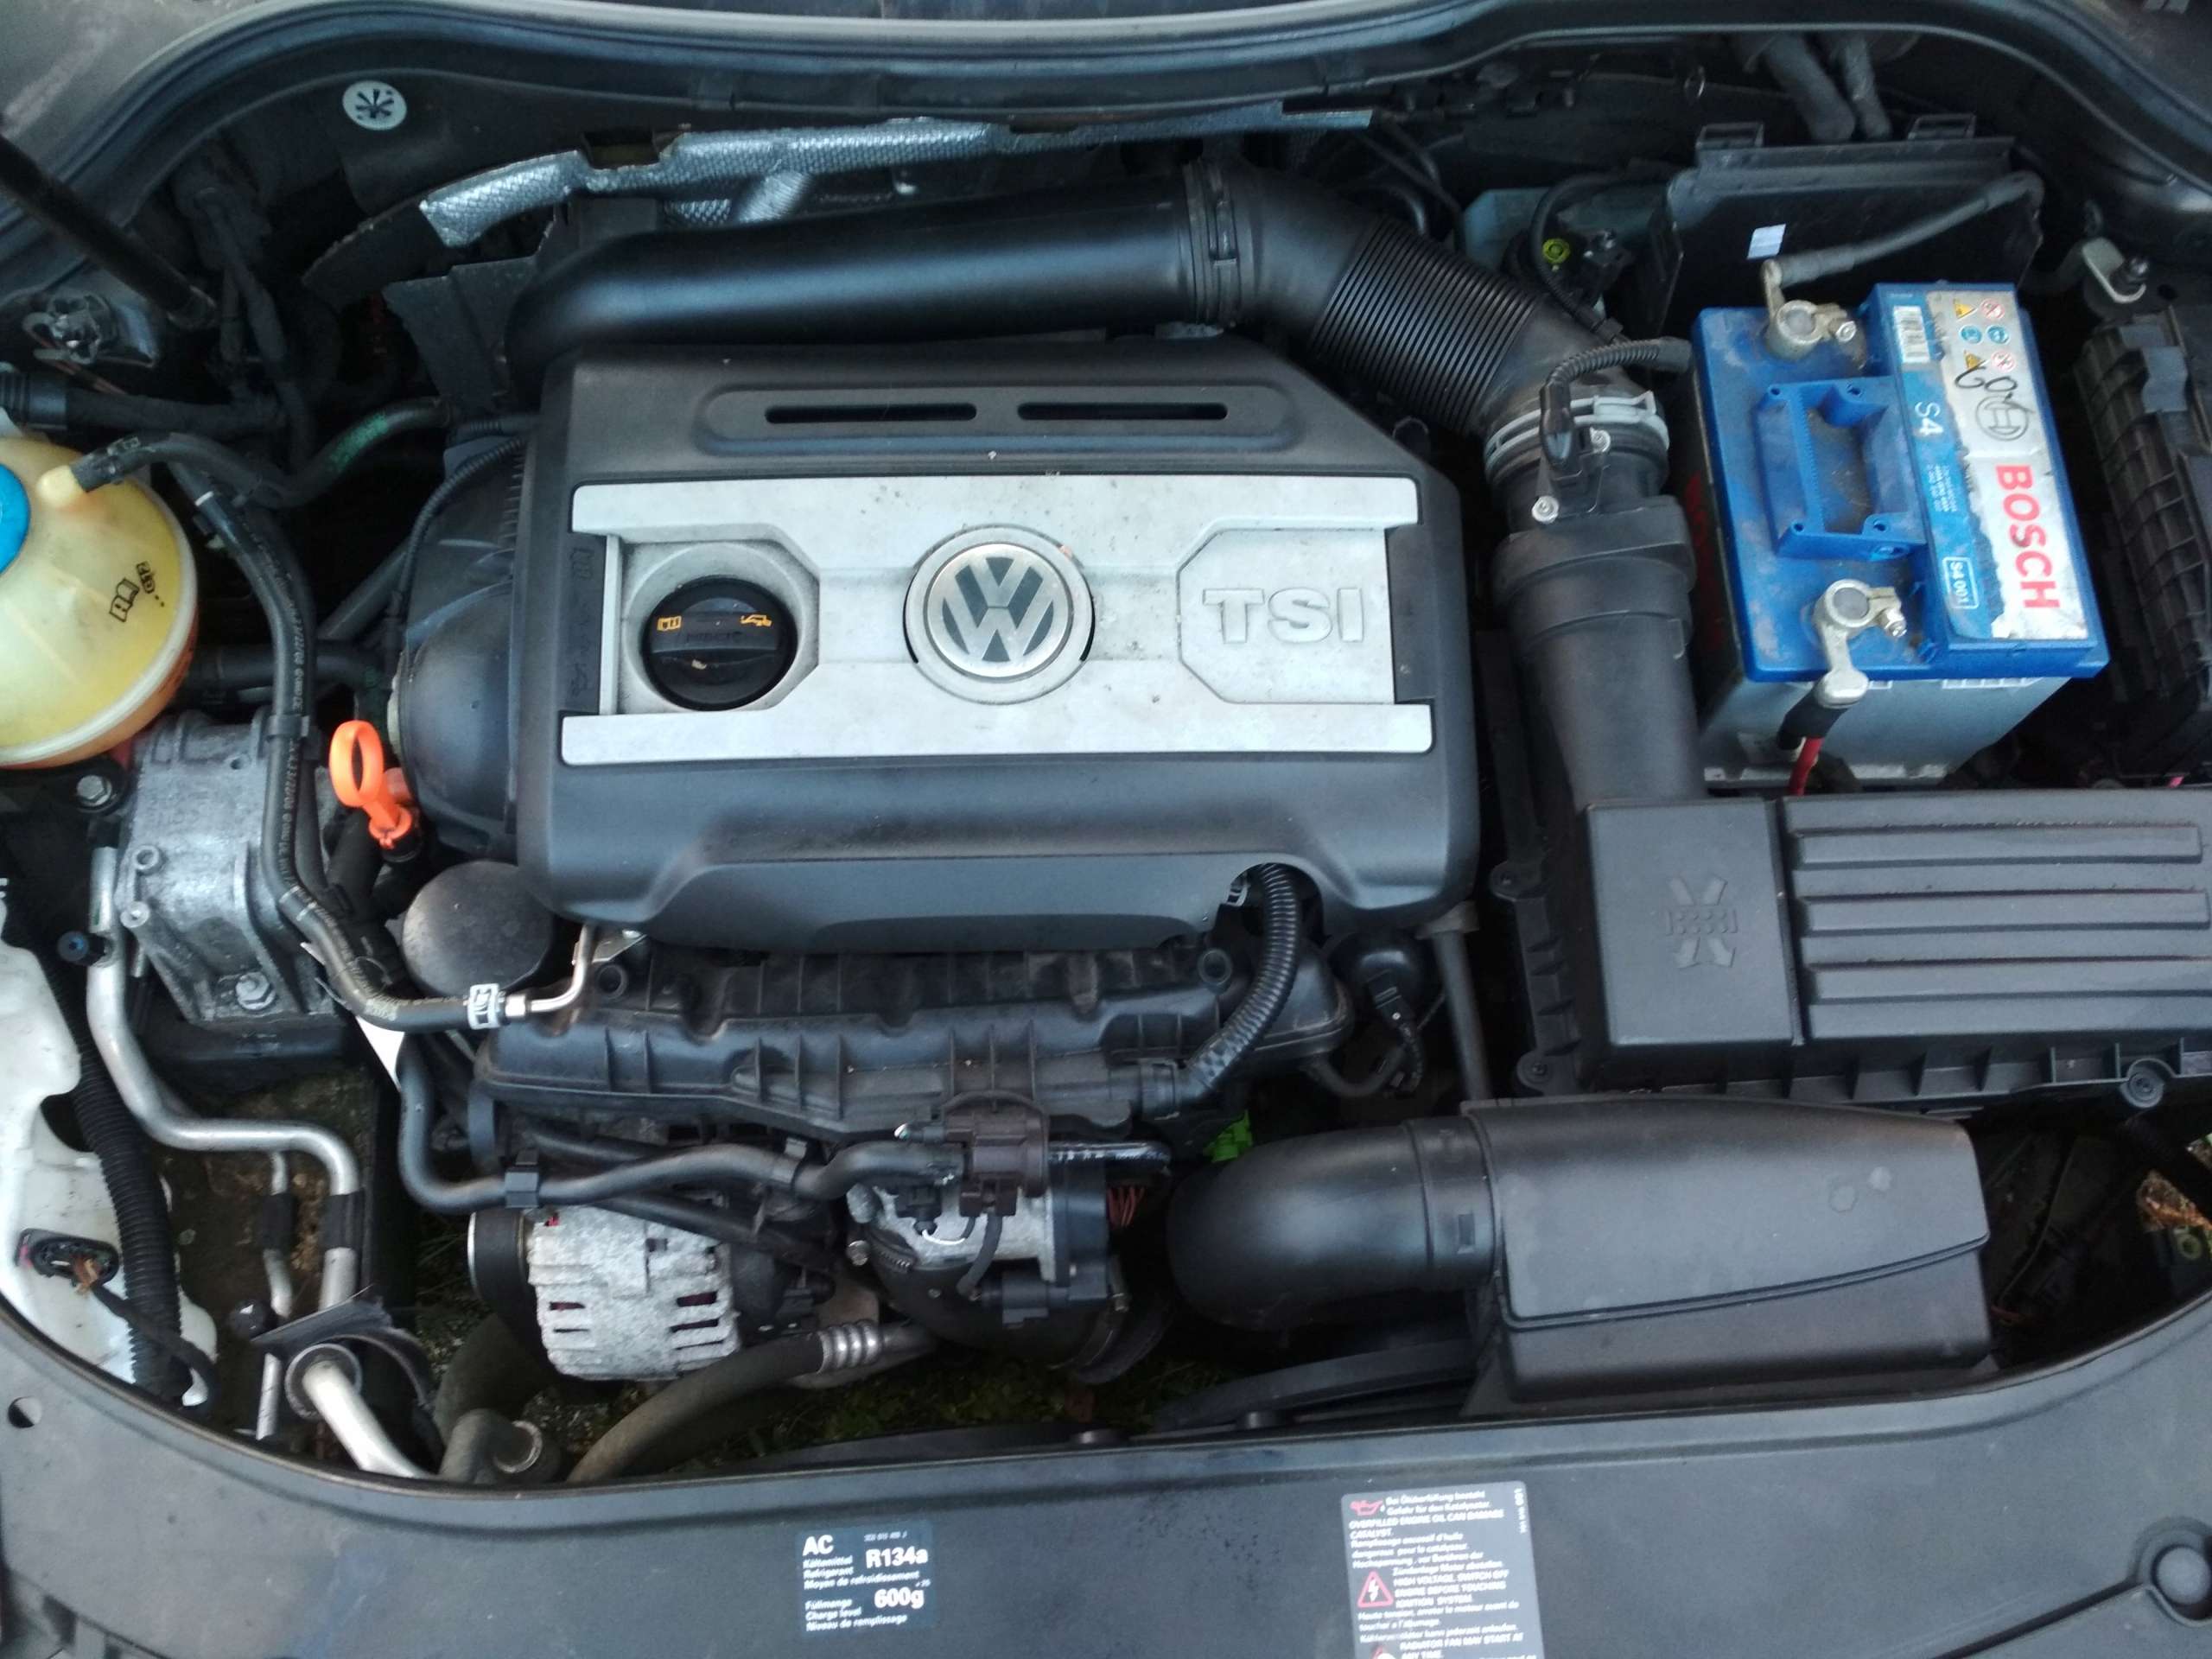 Двигатель пассат б6 1.8. Мотор Фольксваген Пассат б 6 1.8 турбо. Фольксваген б6 1.8 TSI. Двигатель VW Passat cc 1.8 TSI. Мотор Пассат б6 1.8 TSI.